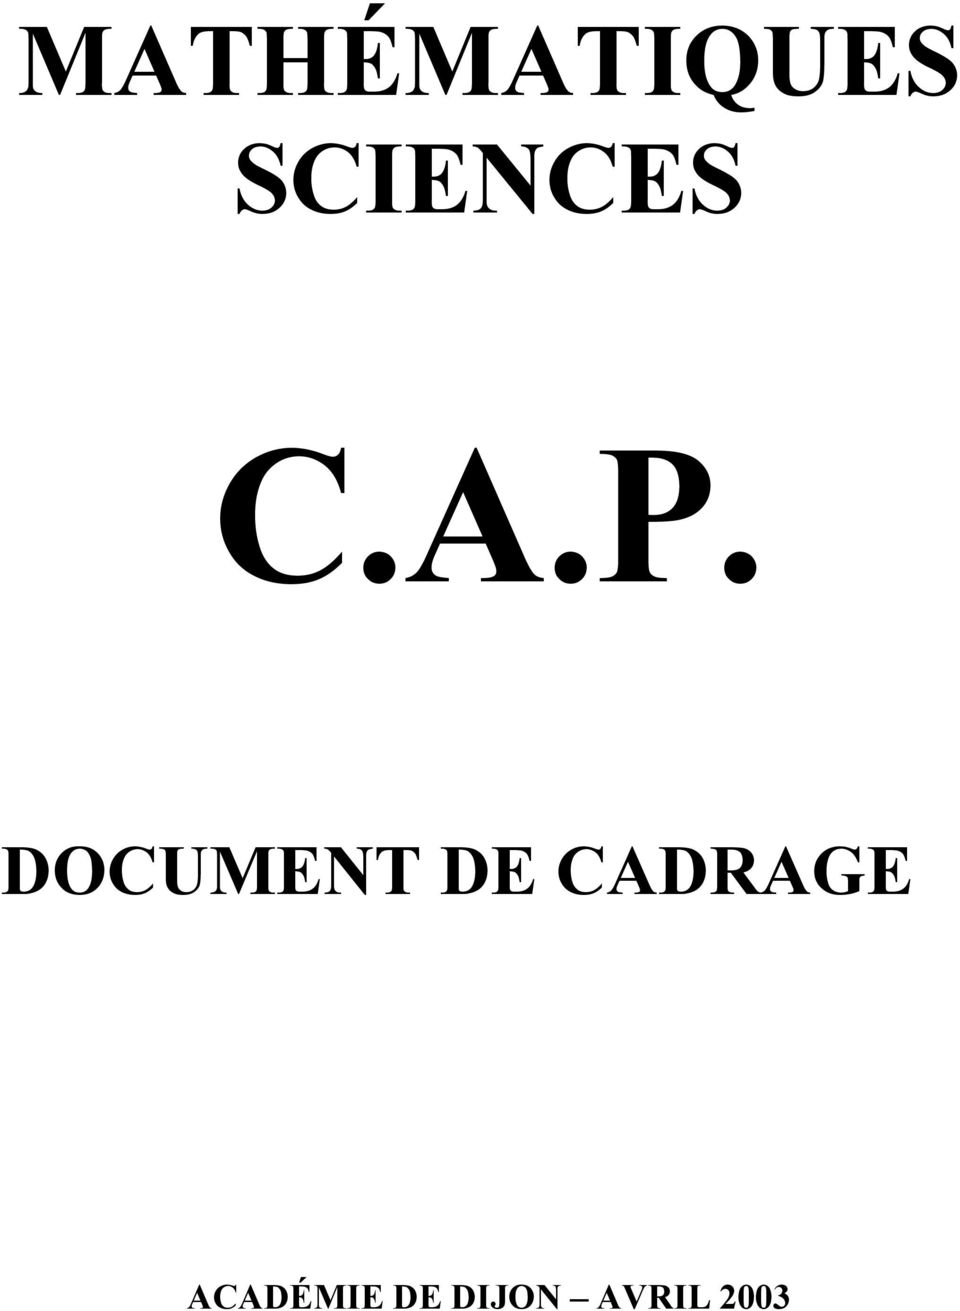 DOCUMENT DE CADRAGE